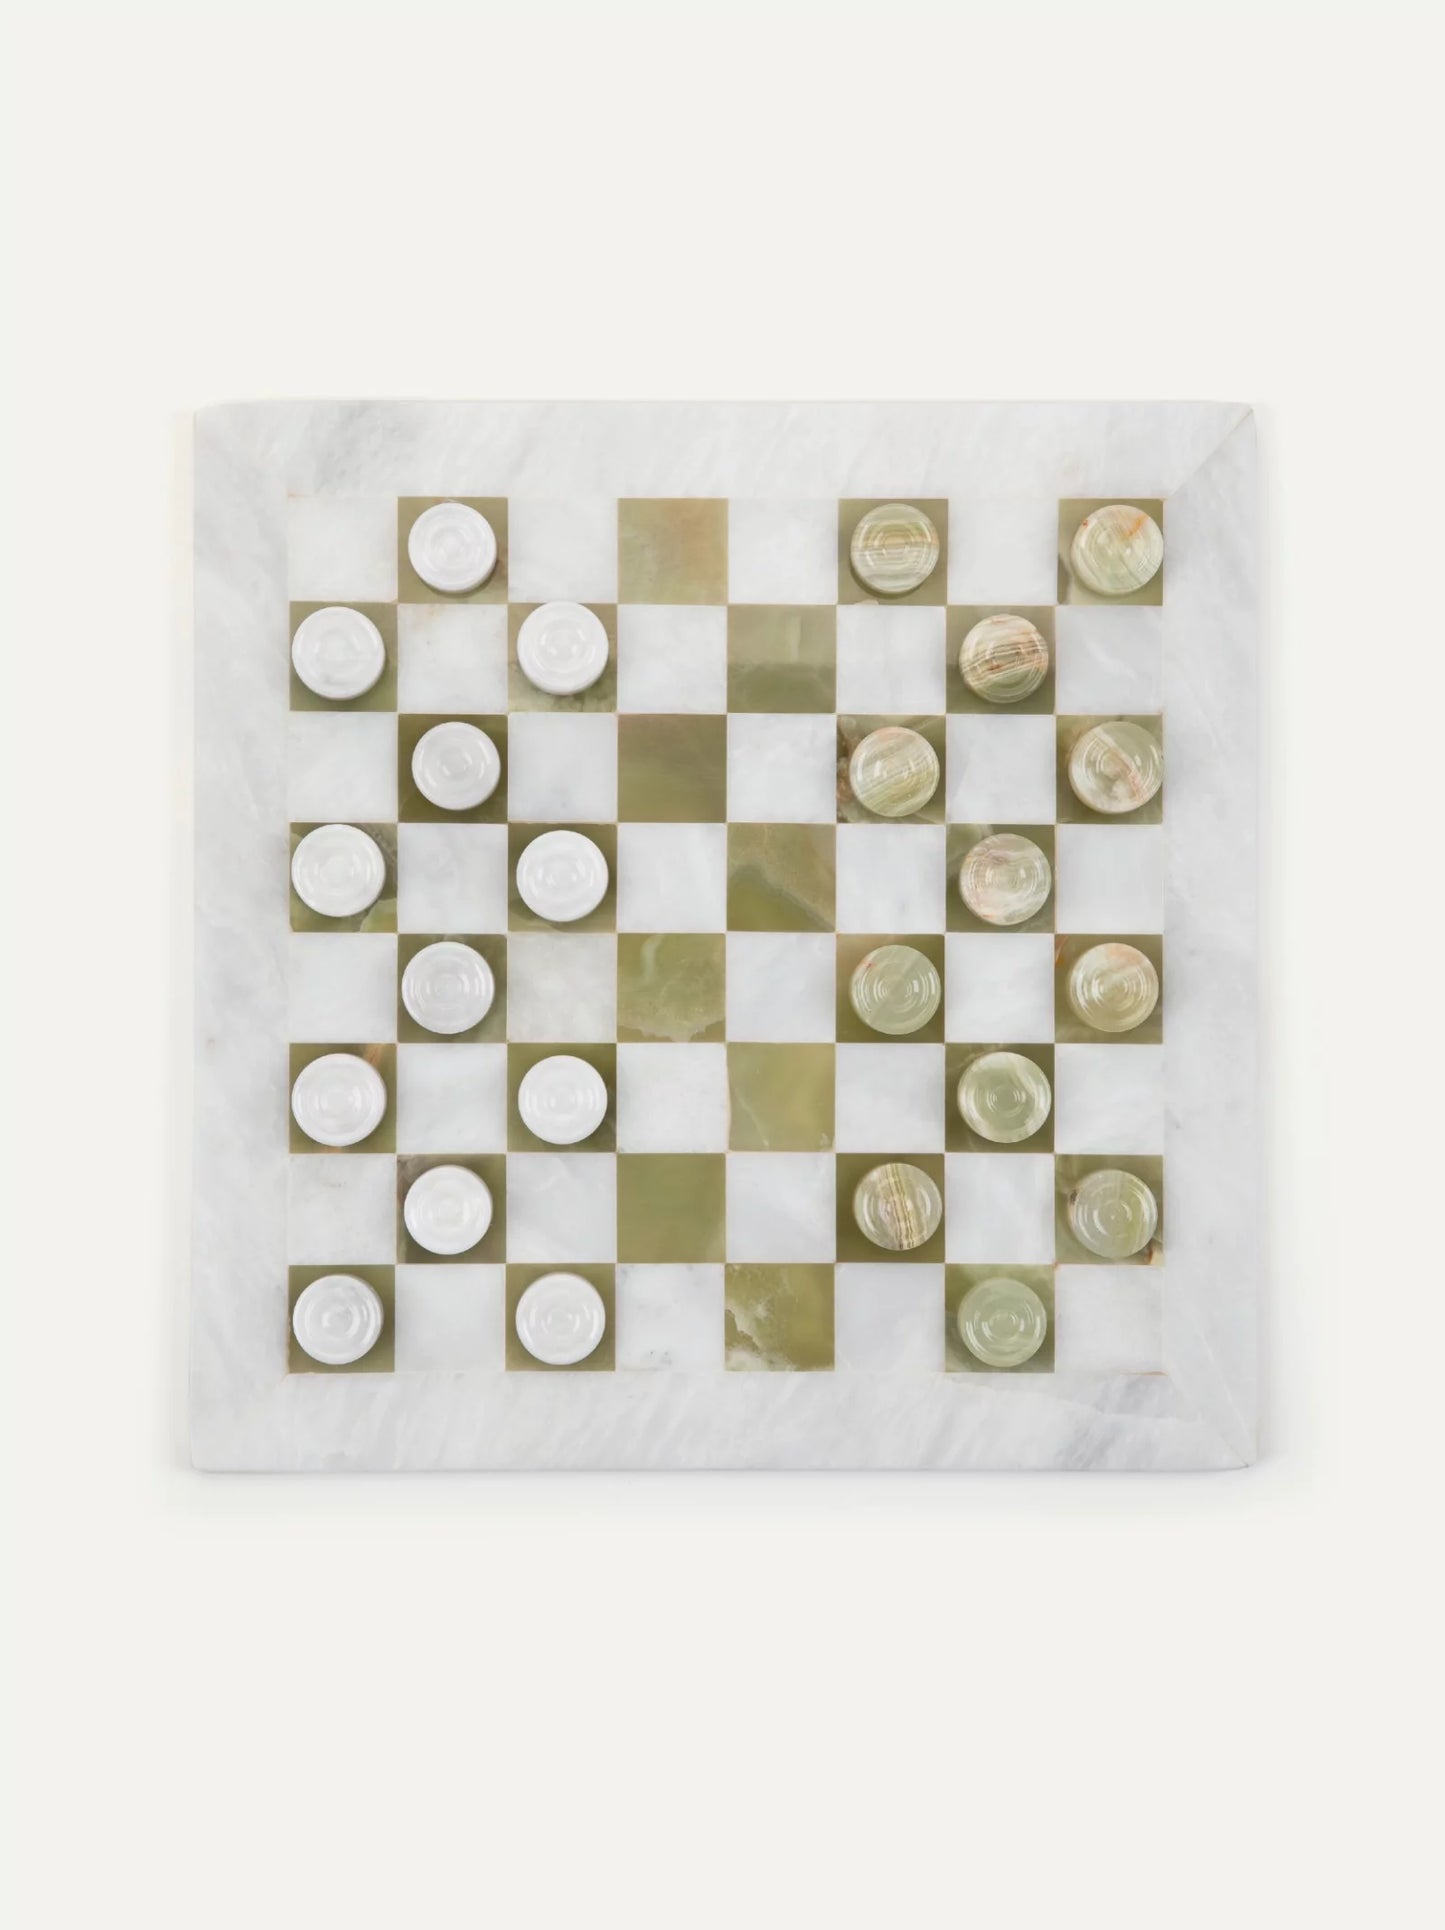 White Carrara Marble & Green Onyx Chess Set